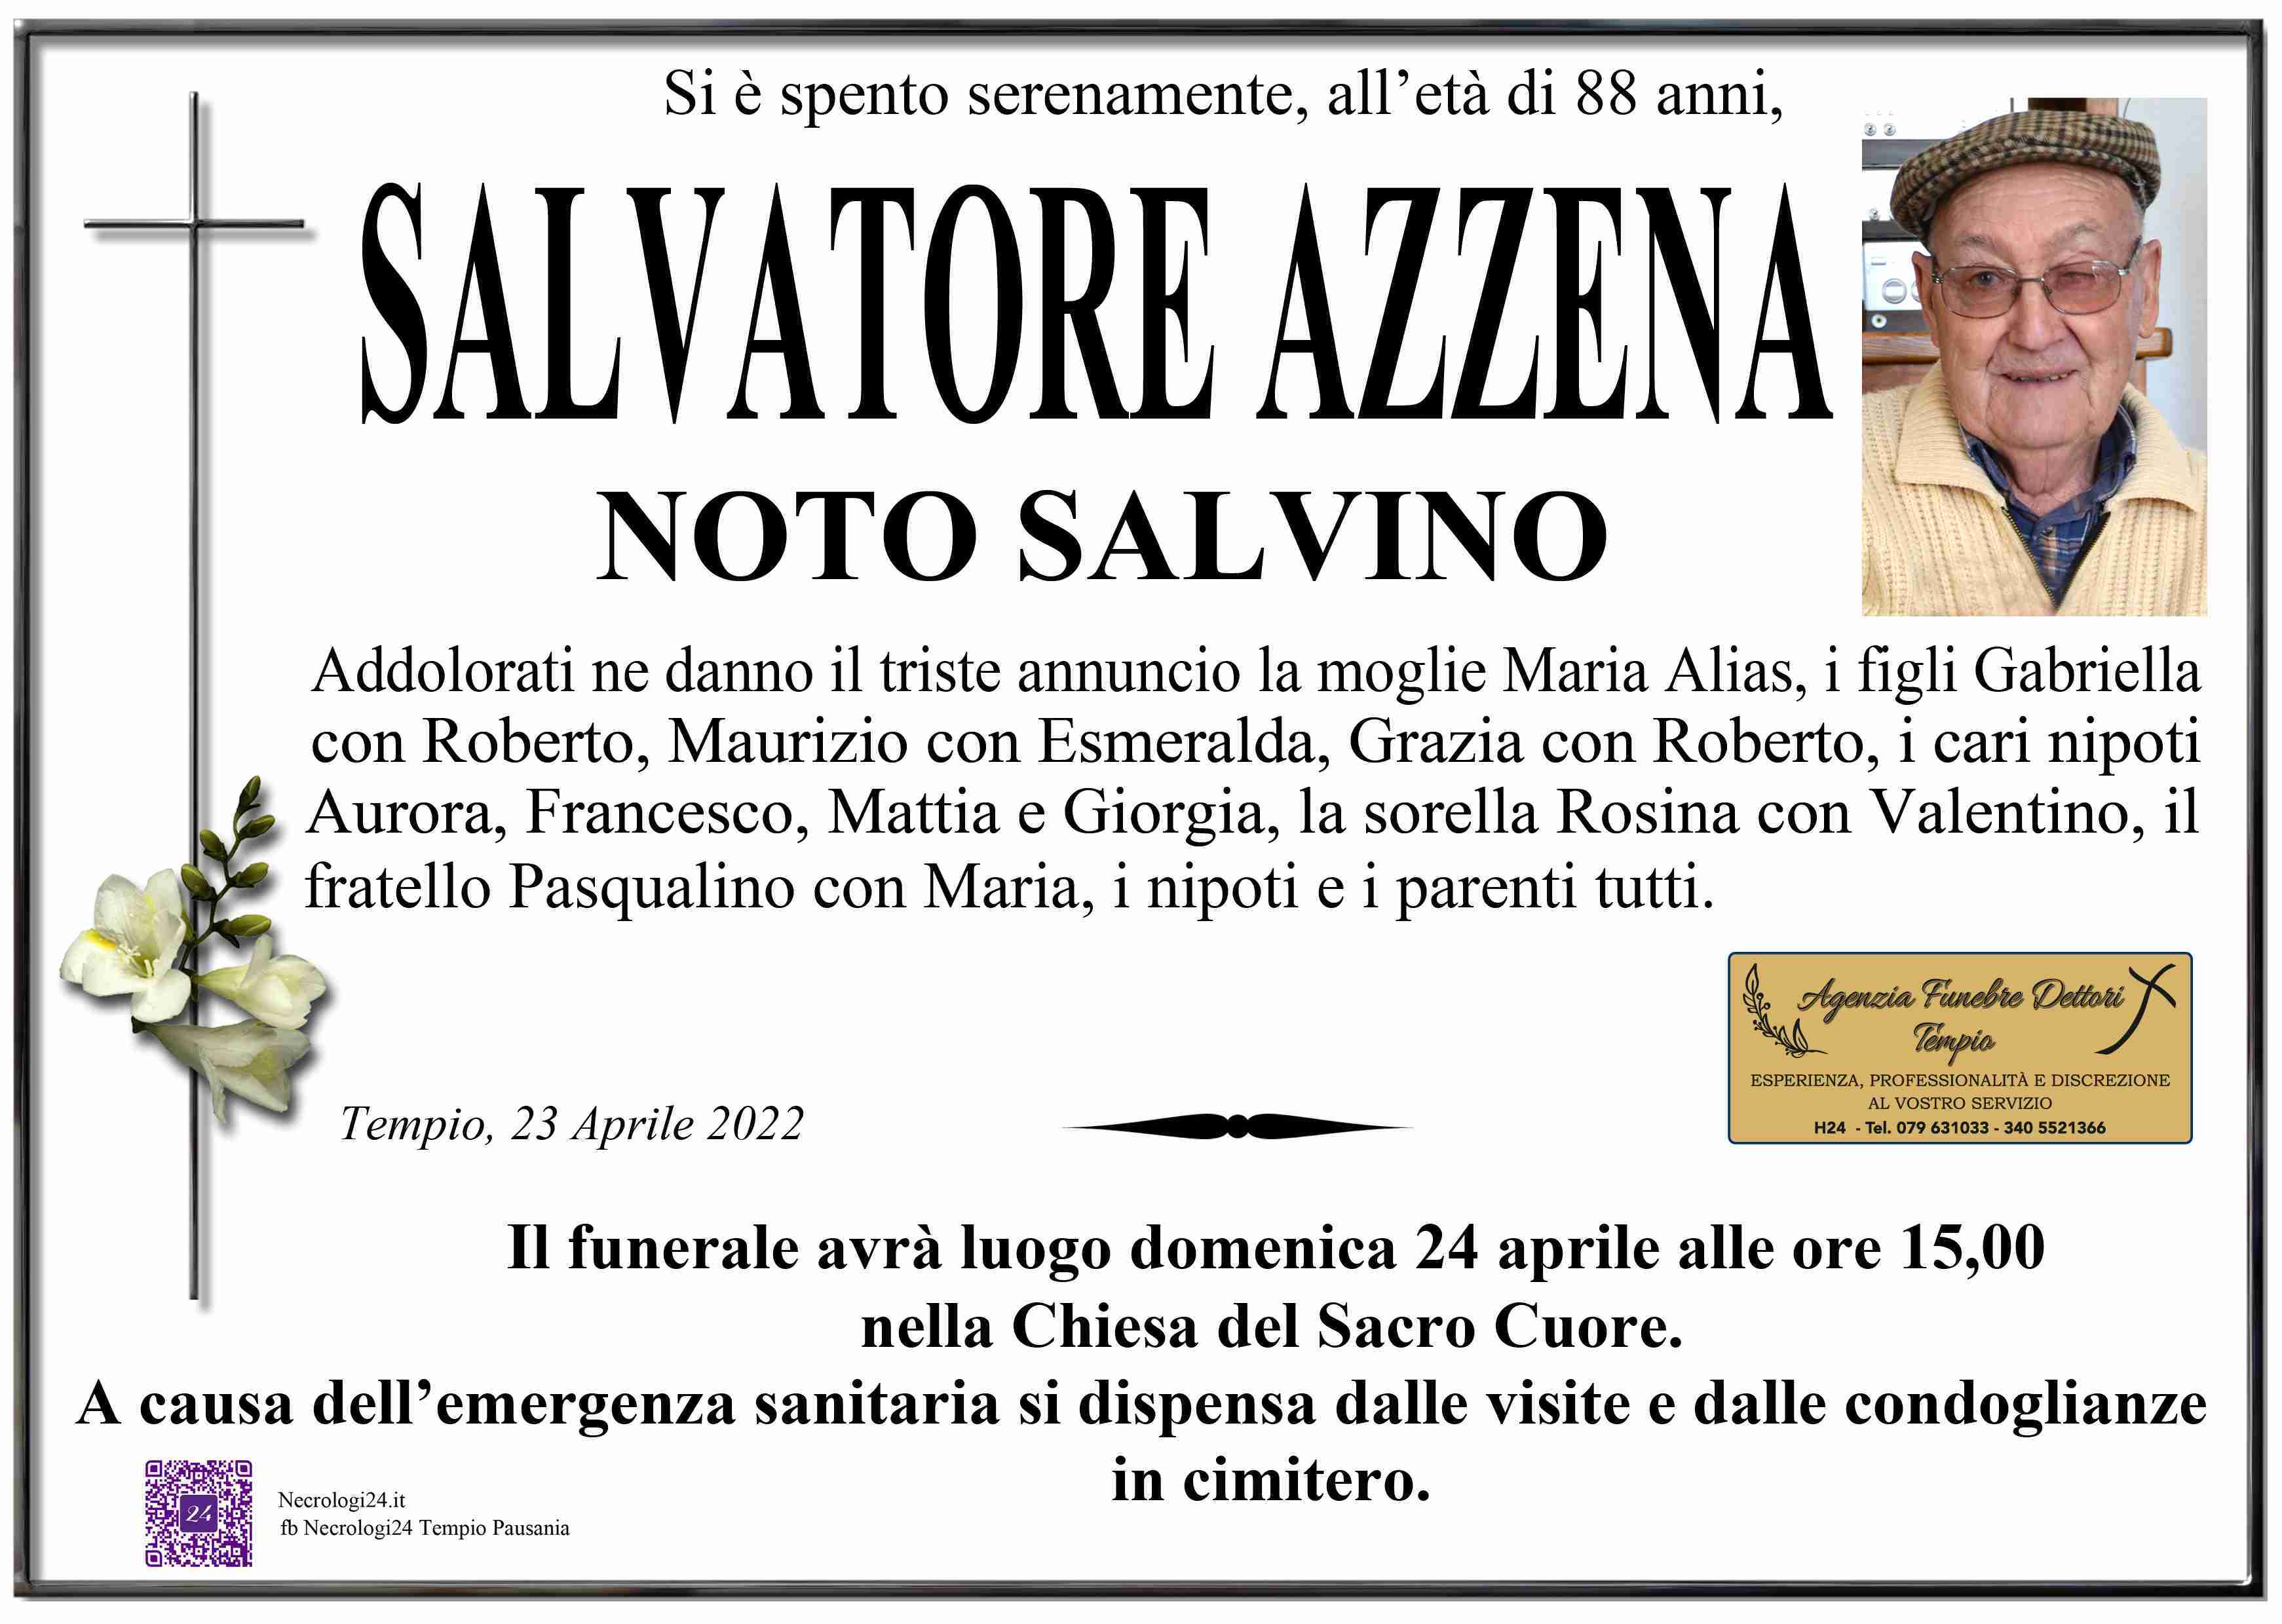 Salvatore Azzena